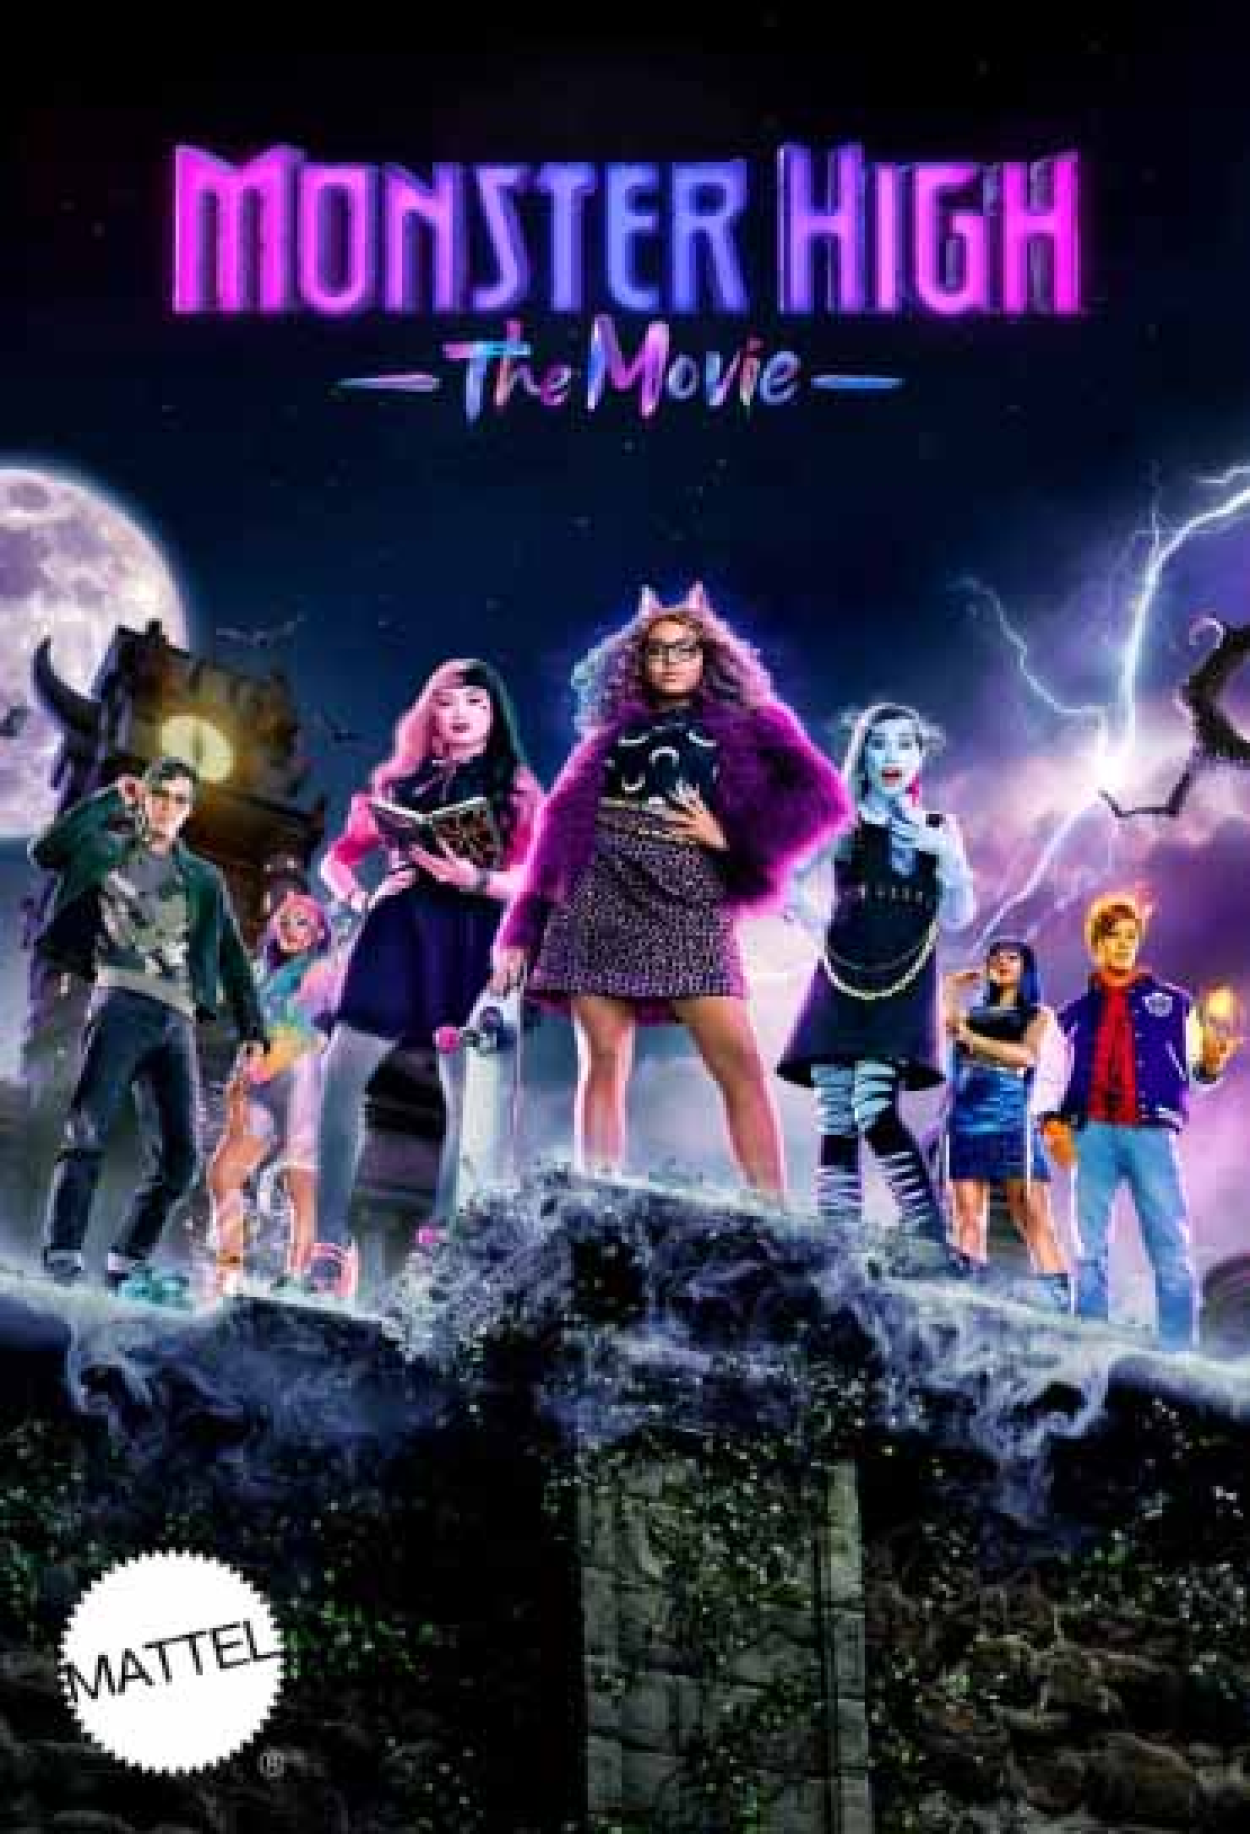 Monster High série animada: Veja onde assistir